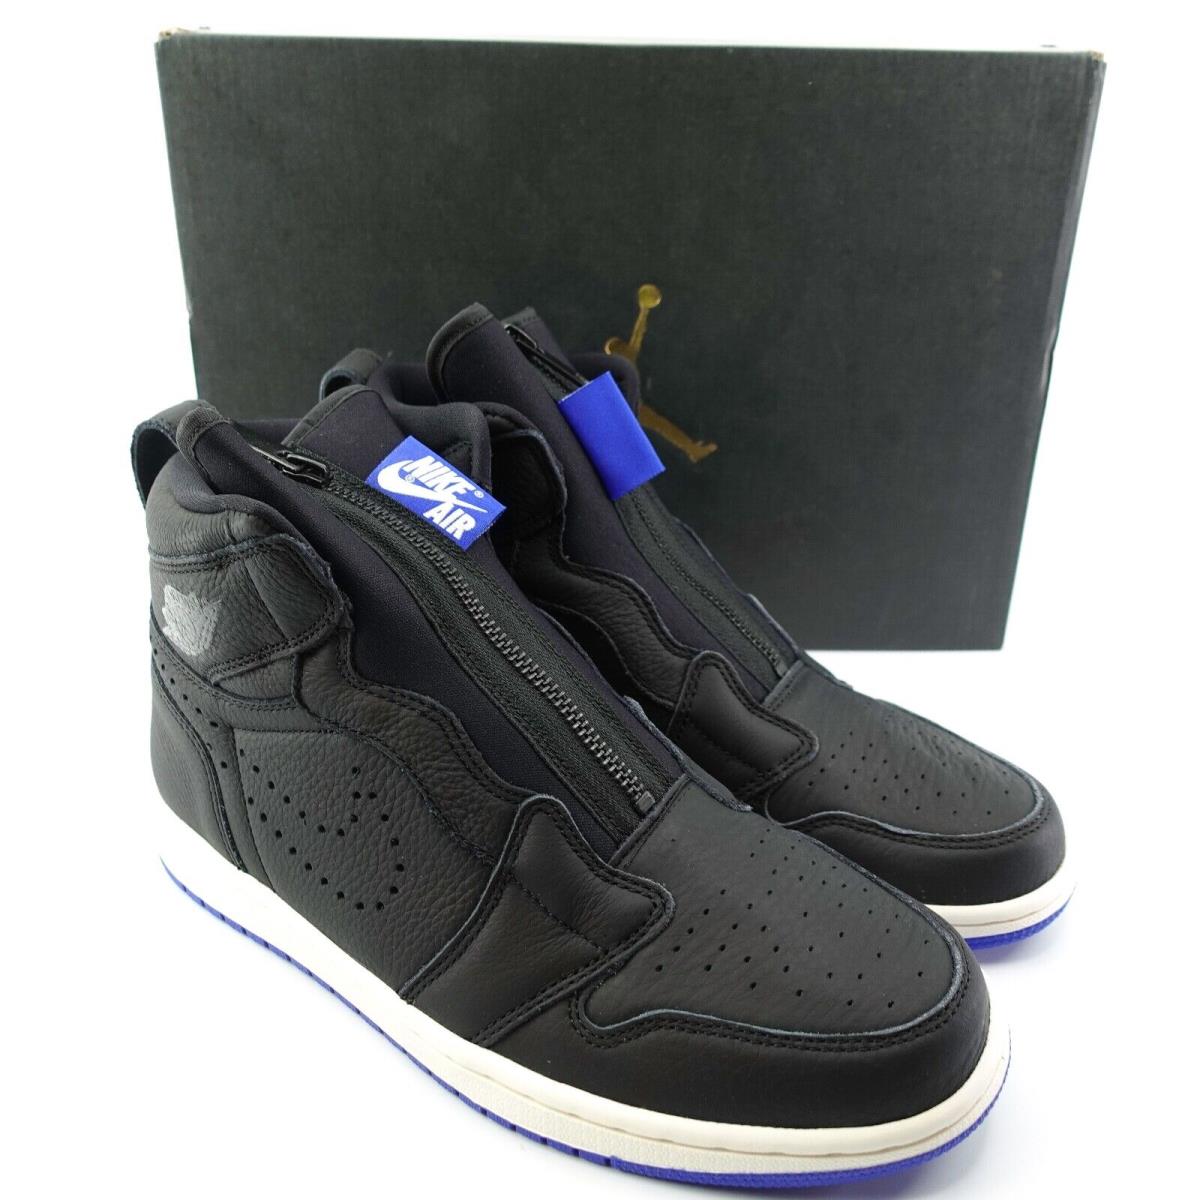 Mens Air Jordan 1 High Zip Black Hyper Royal Blue Basketball Shoes AR4833 001 - Black